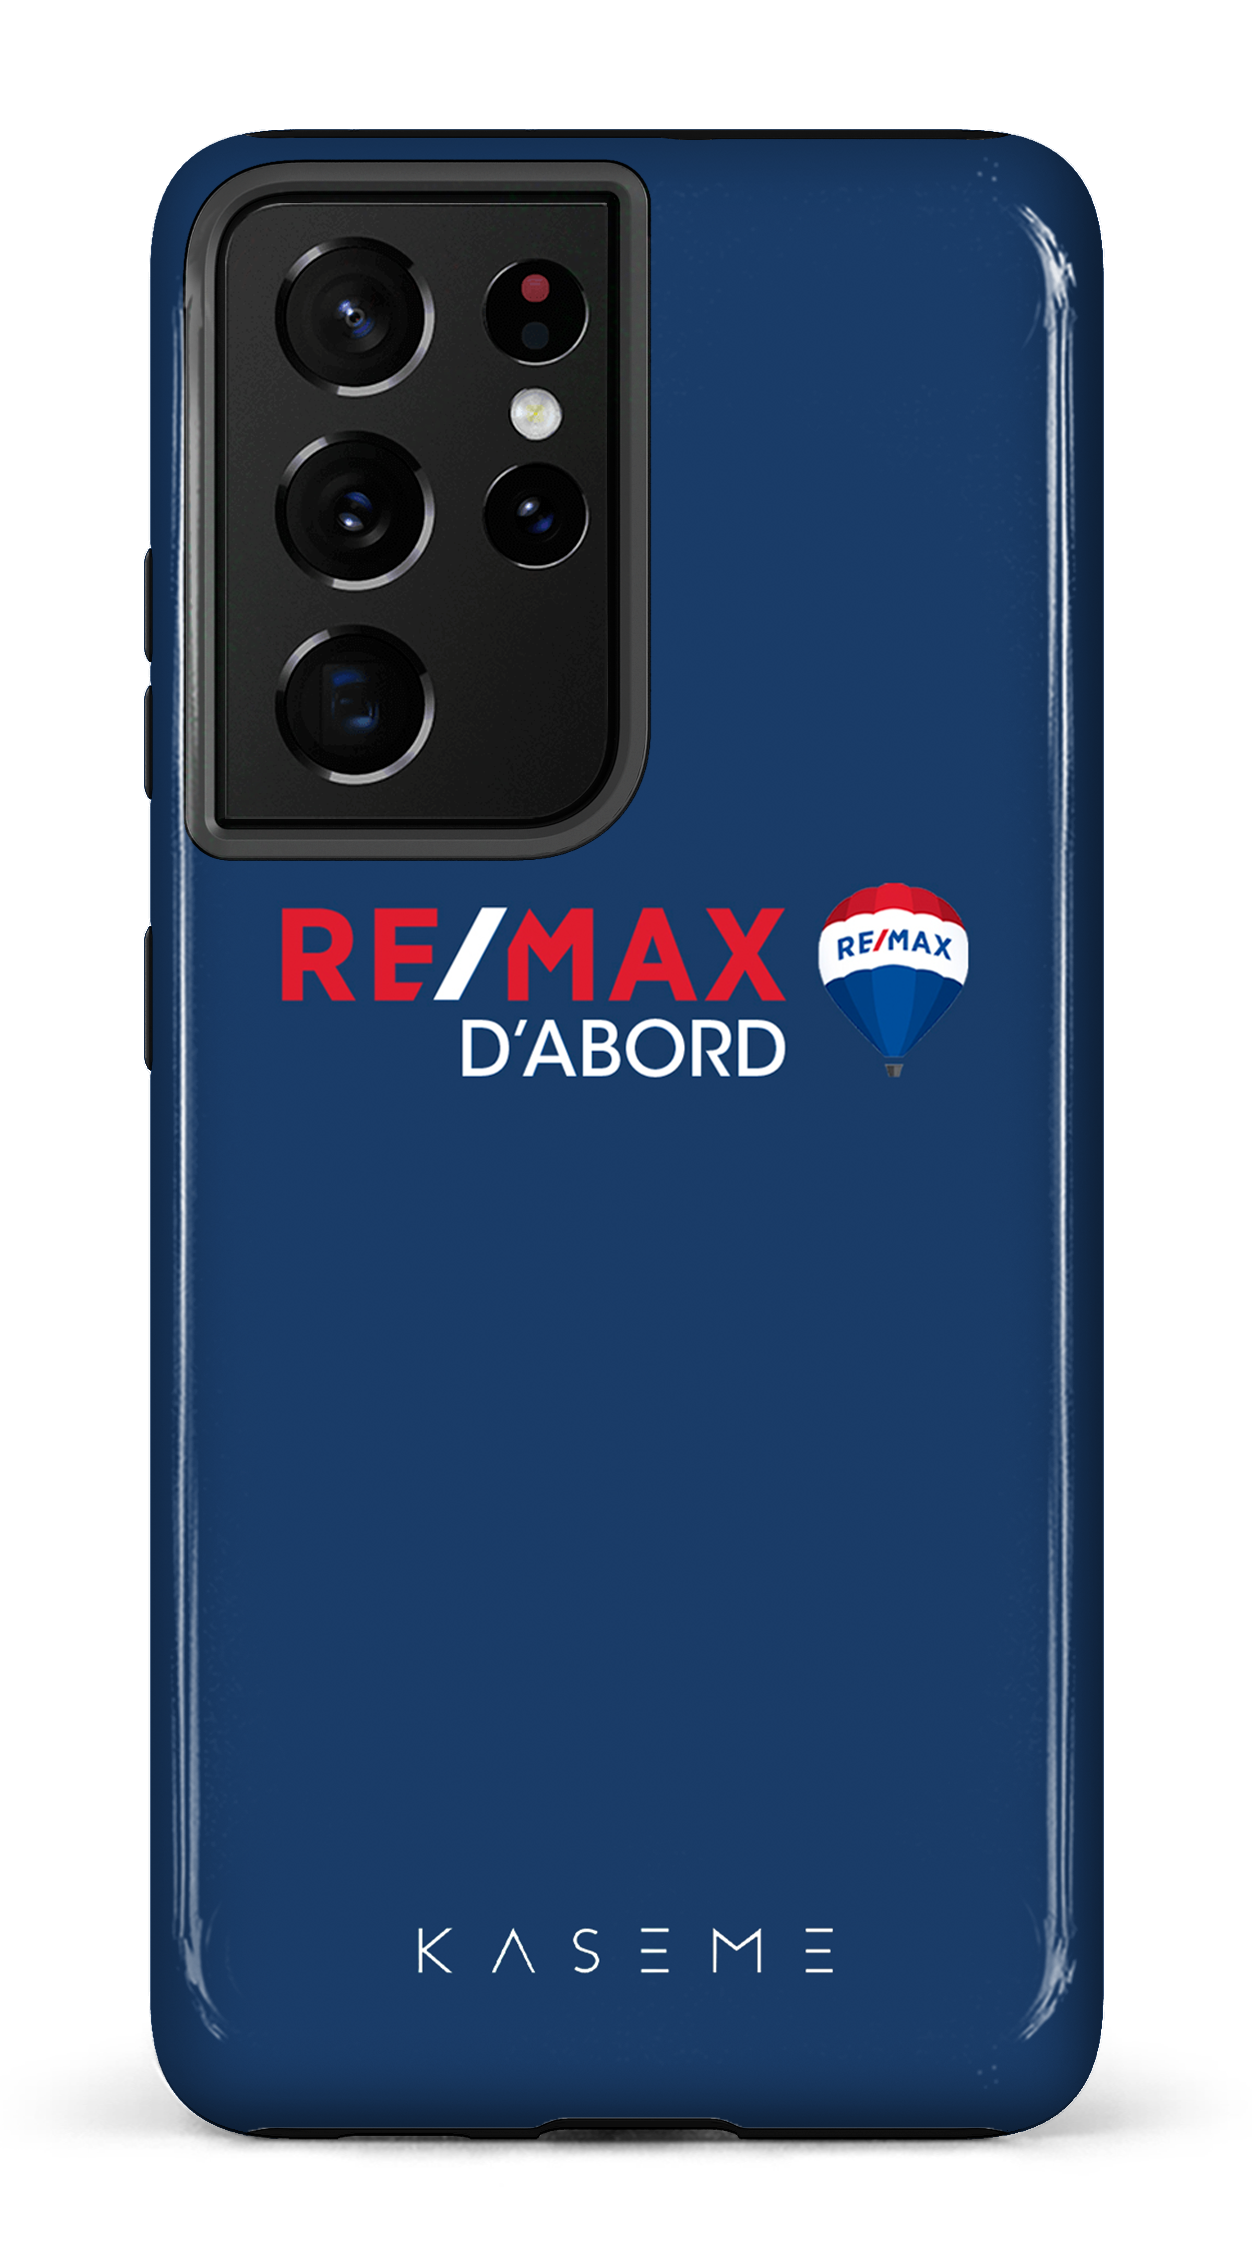 Remax D'abord Bleu - Galaxy S21 Ultra